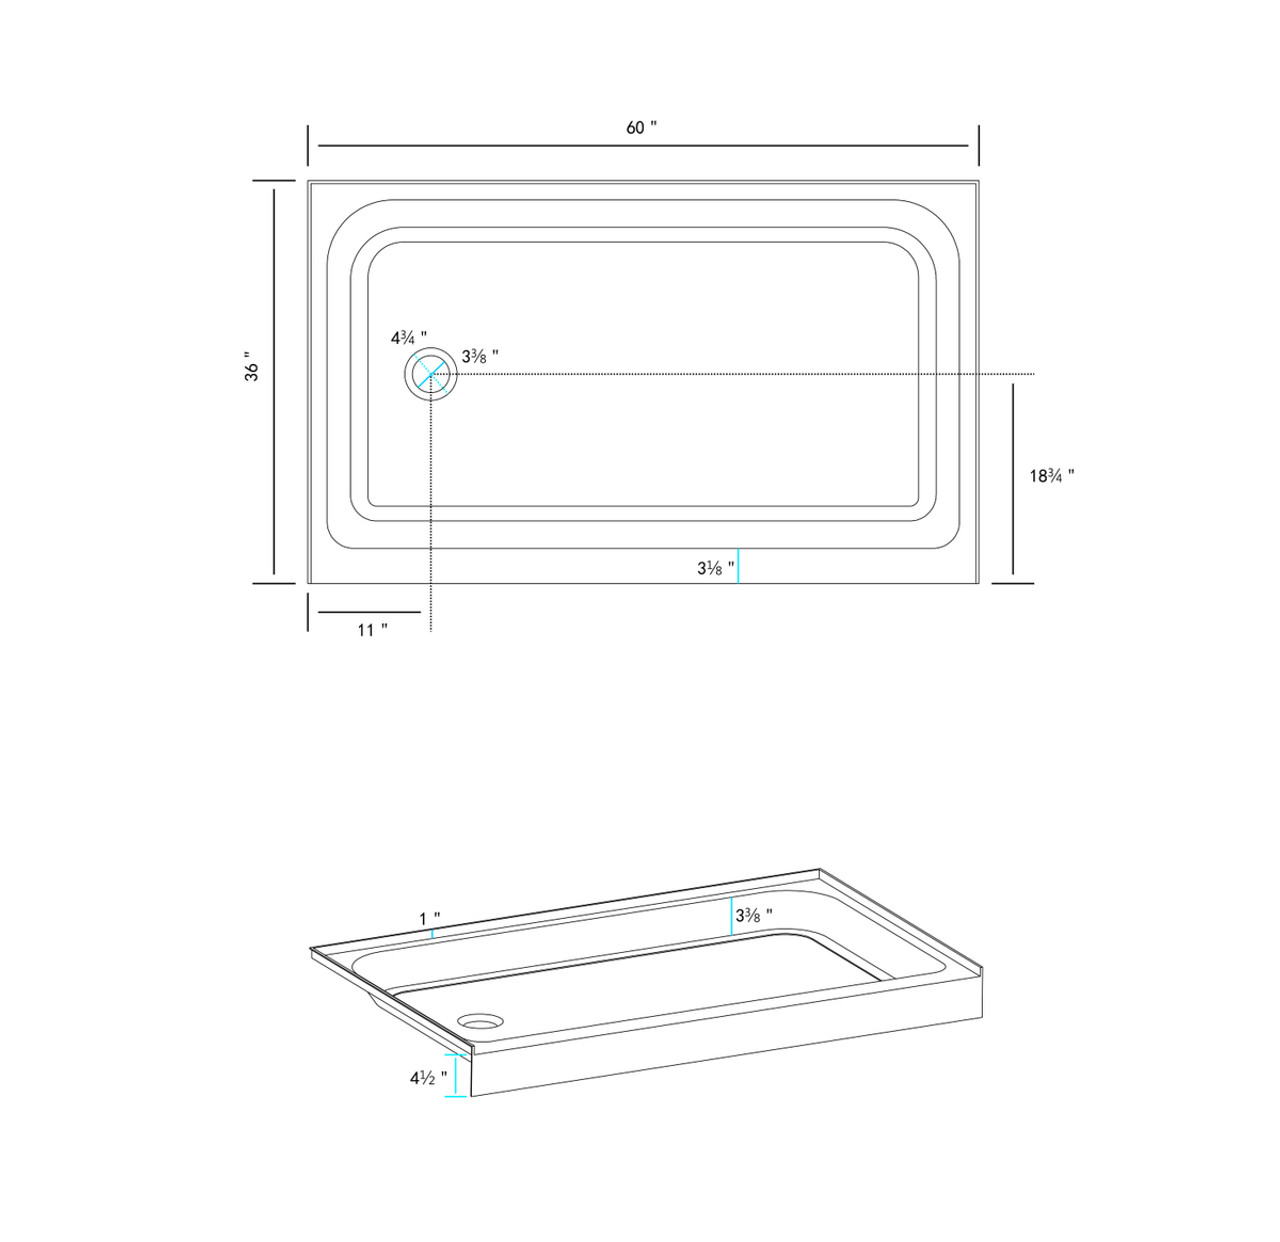 Elegant Kitchen and Bath STY01-L6036 60x36 inch Single threshold shower tray left drain in glossy white